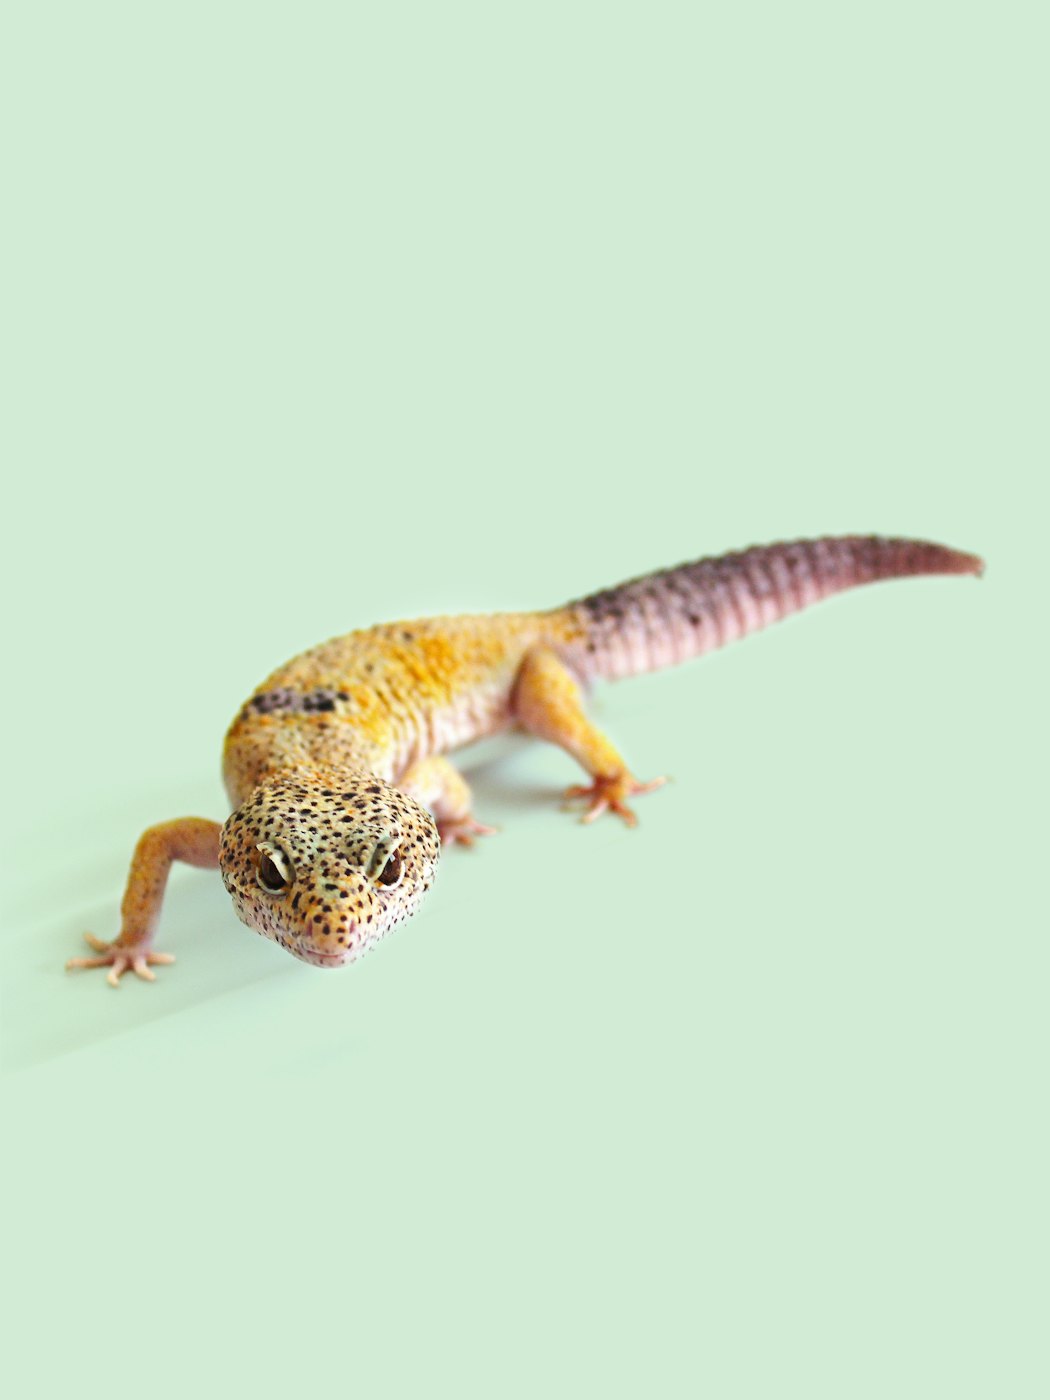 close-upleopardgeckofront